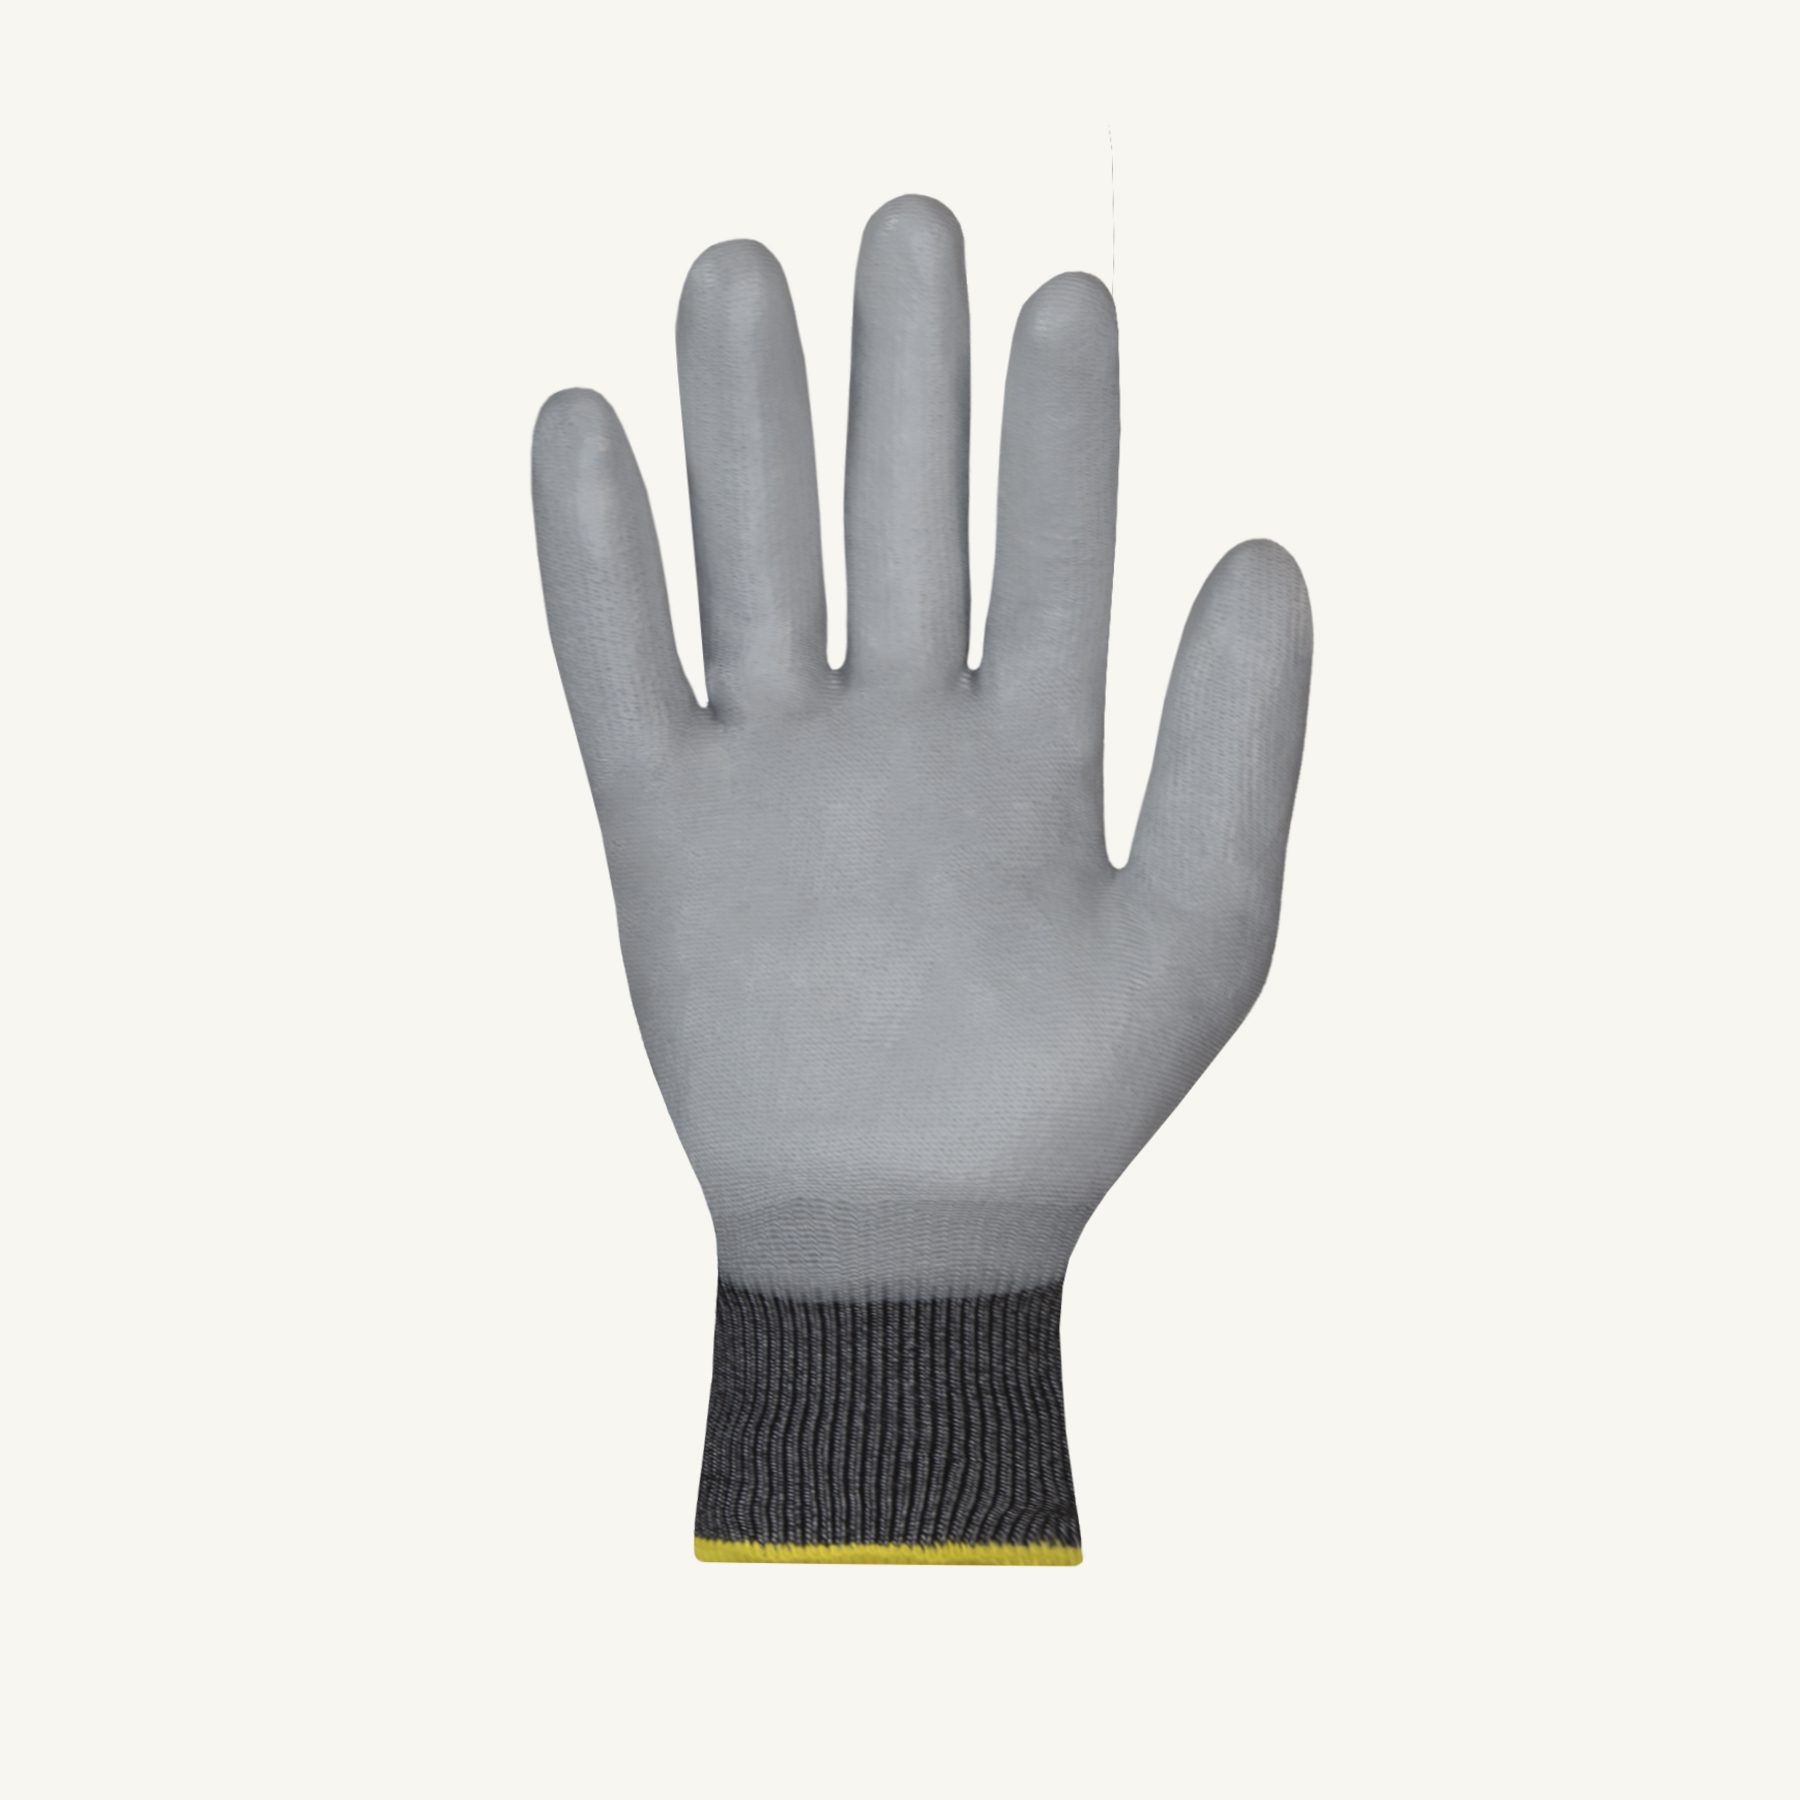 Superior Glove® TenActiv™ PS18TAWPUE PU Coated A3 Cut Gloves